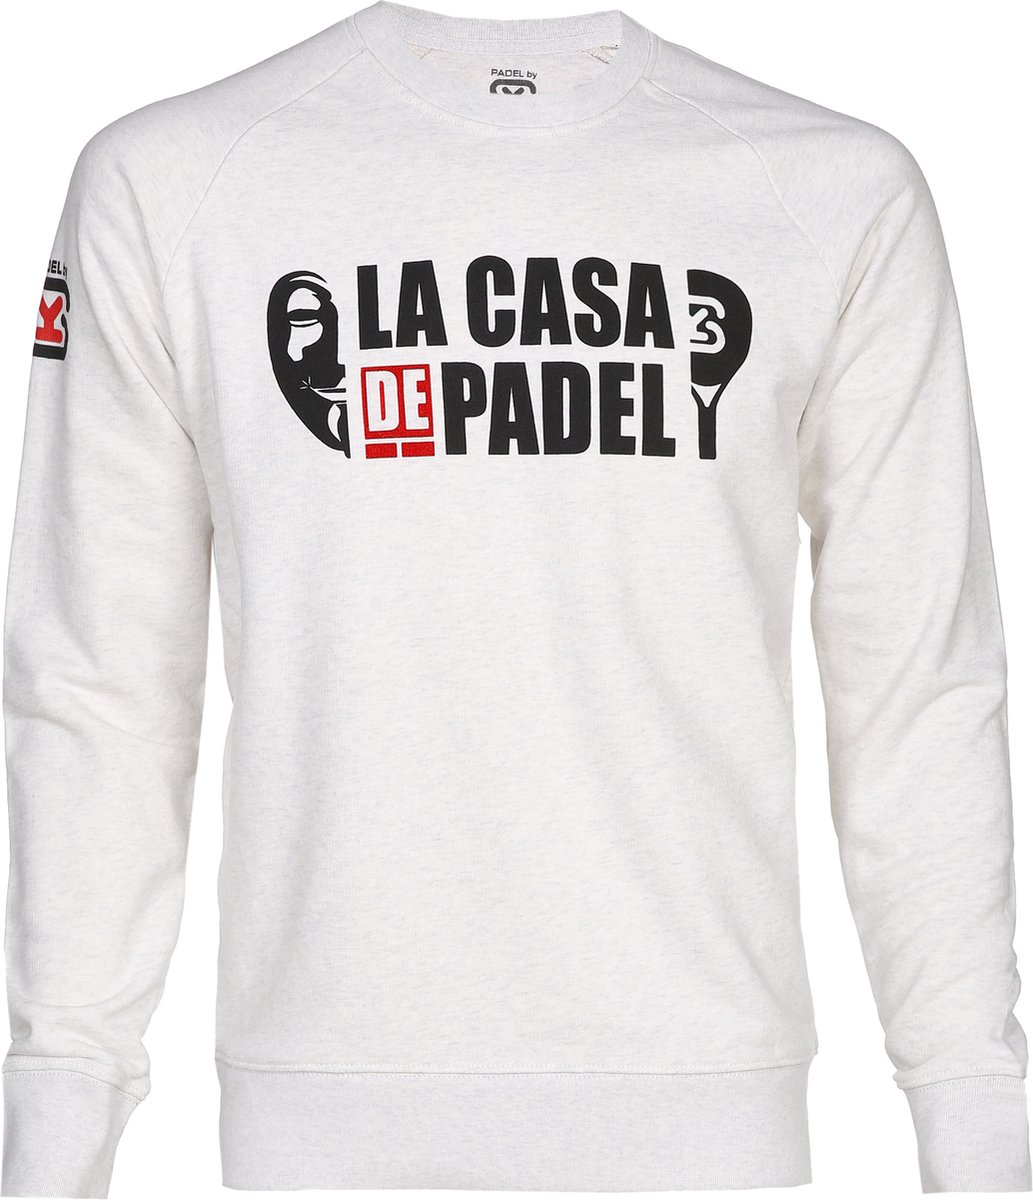 PADELbySY - PADEL - LA CASA DE PADEL - UNISEX SWEATER - ASH - SIZE XL